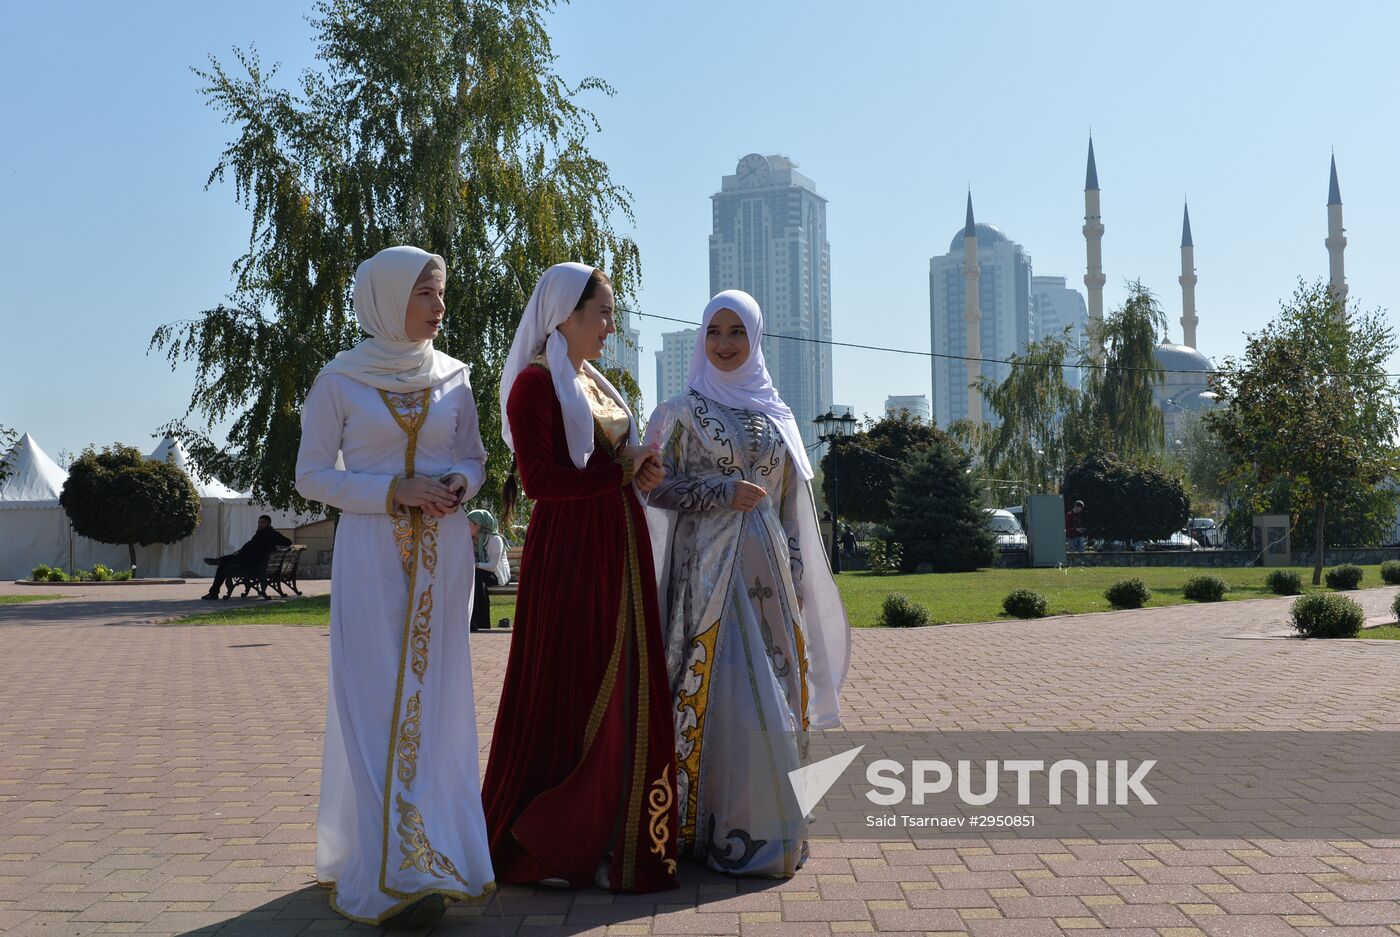 City Day in Grozny